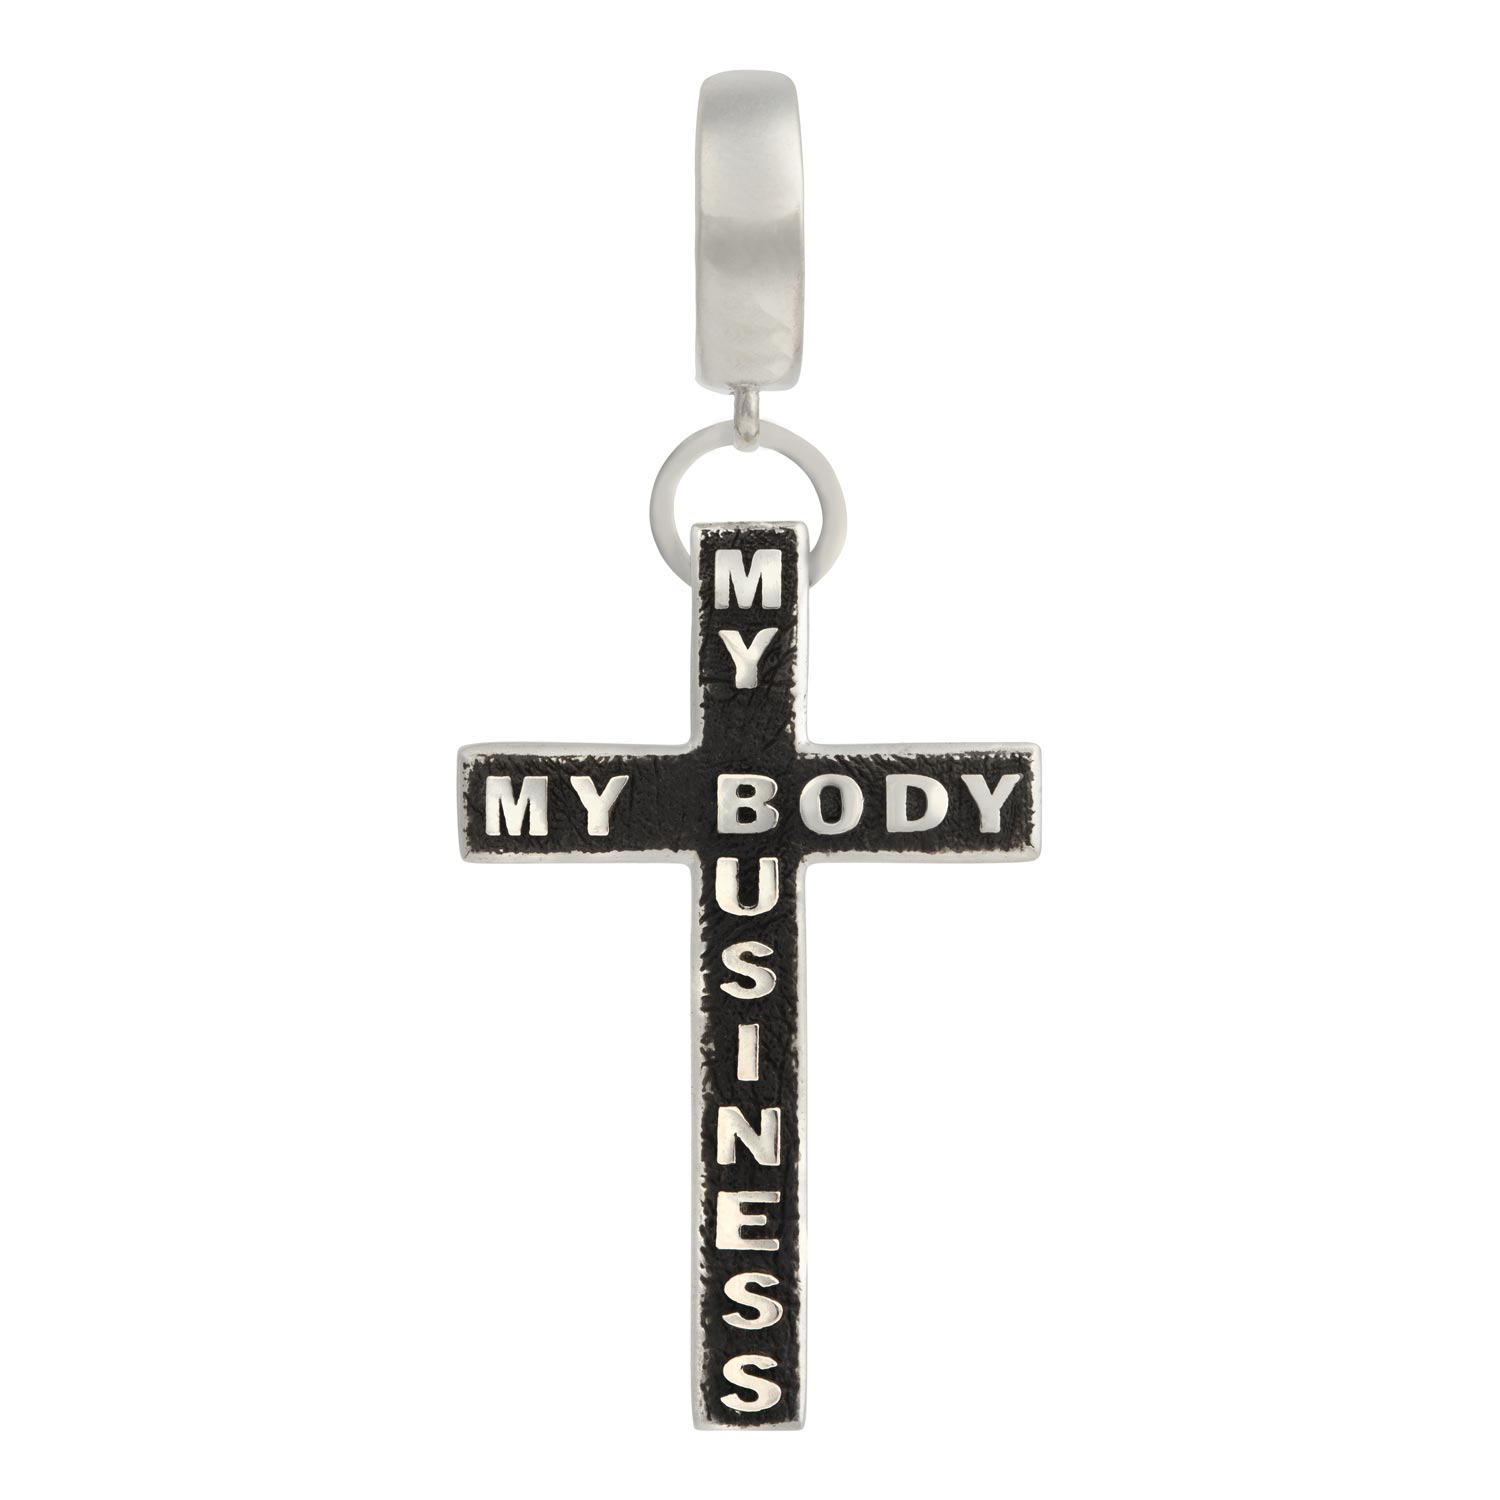      ''My body - My Business'' AMARIN Jewelry 20b03Eb